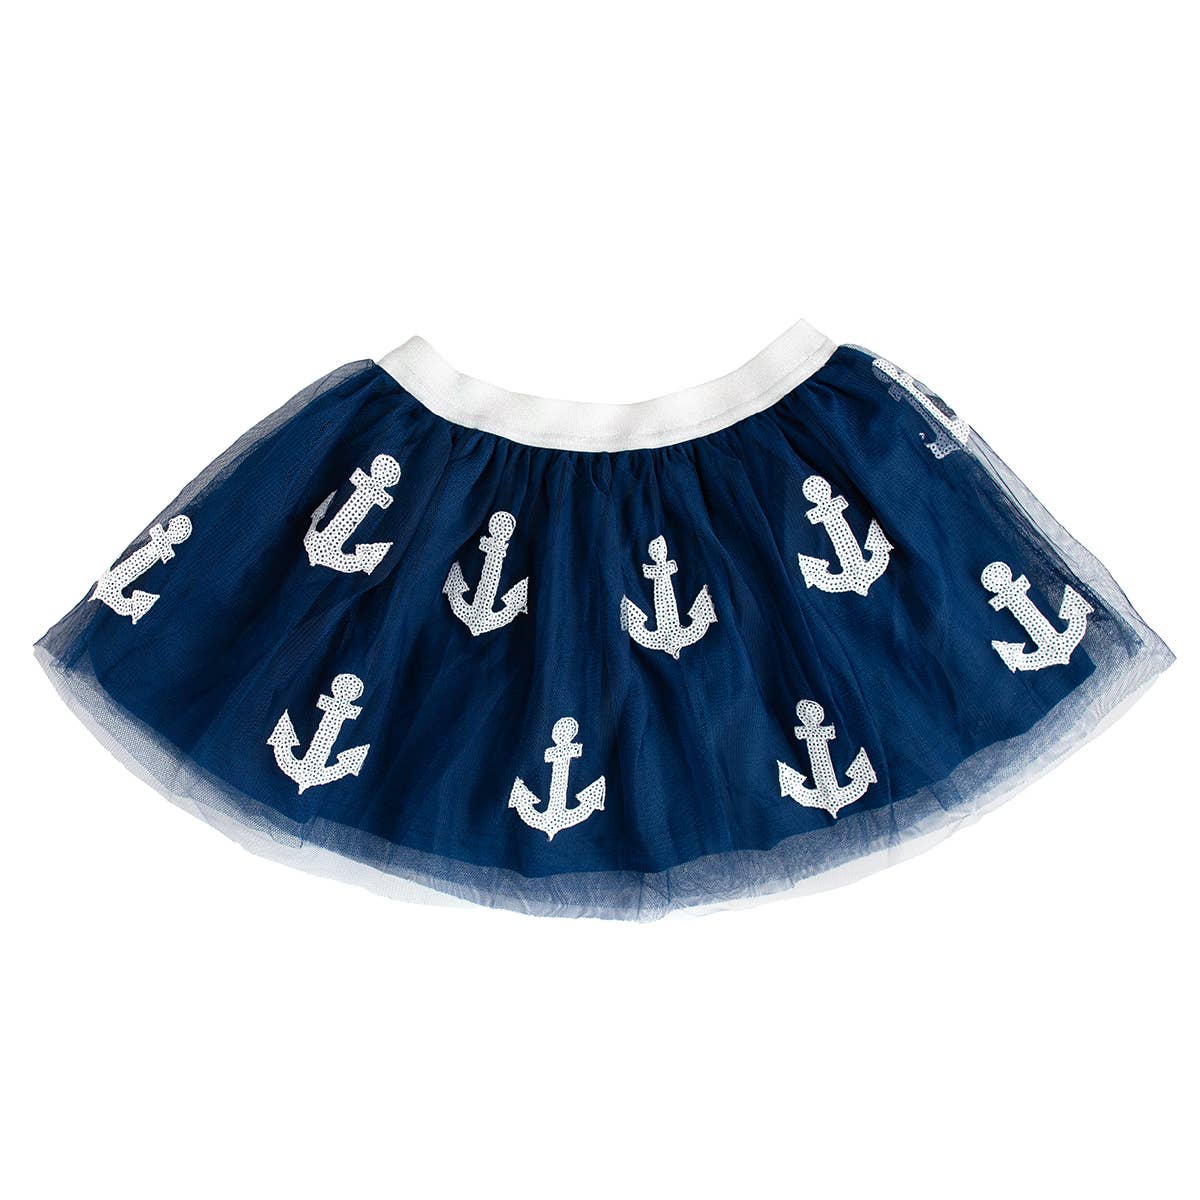 Anchor Tutu - Dress Up Skirt - Kids Summer Tutu: 1-2Y